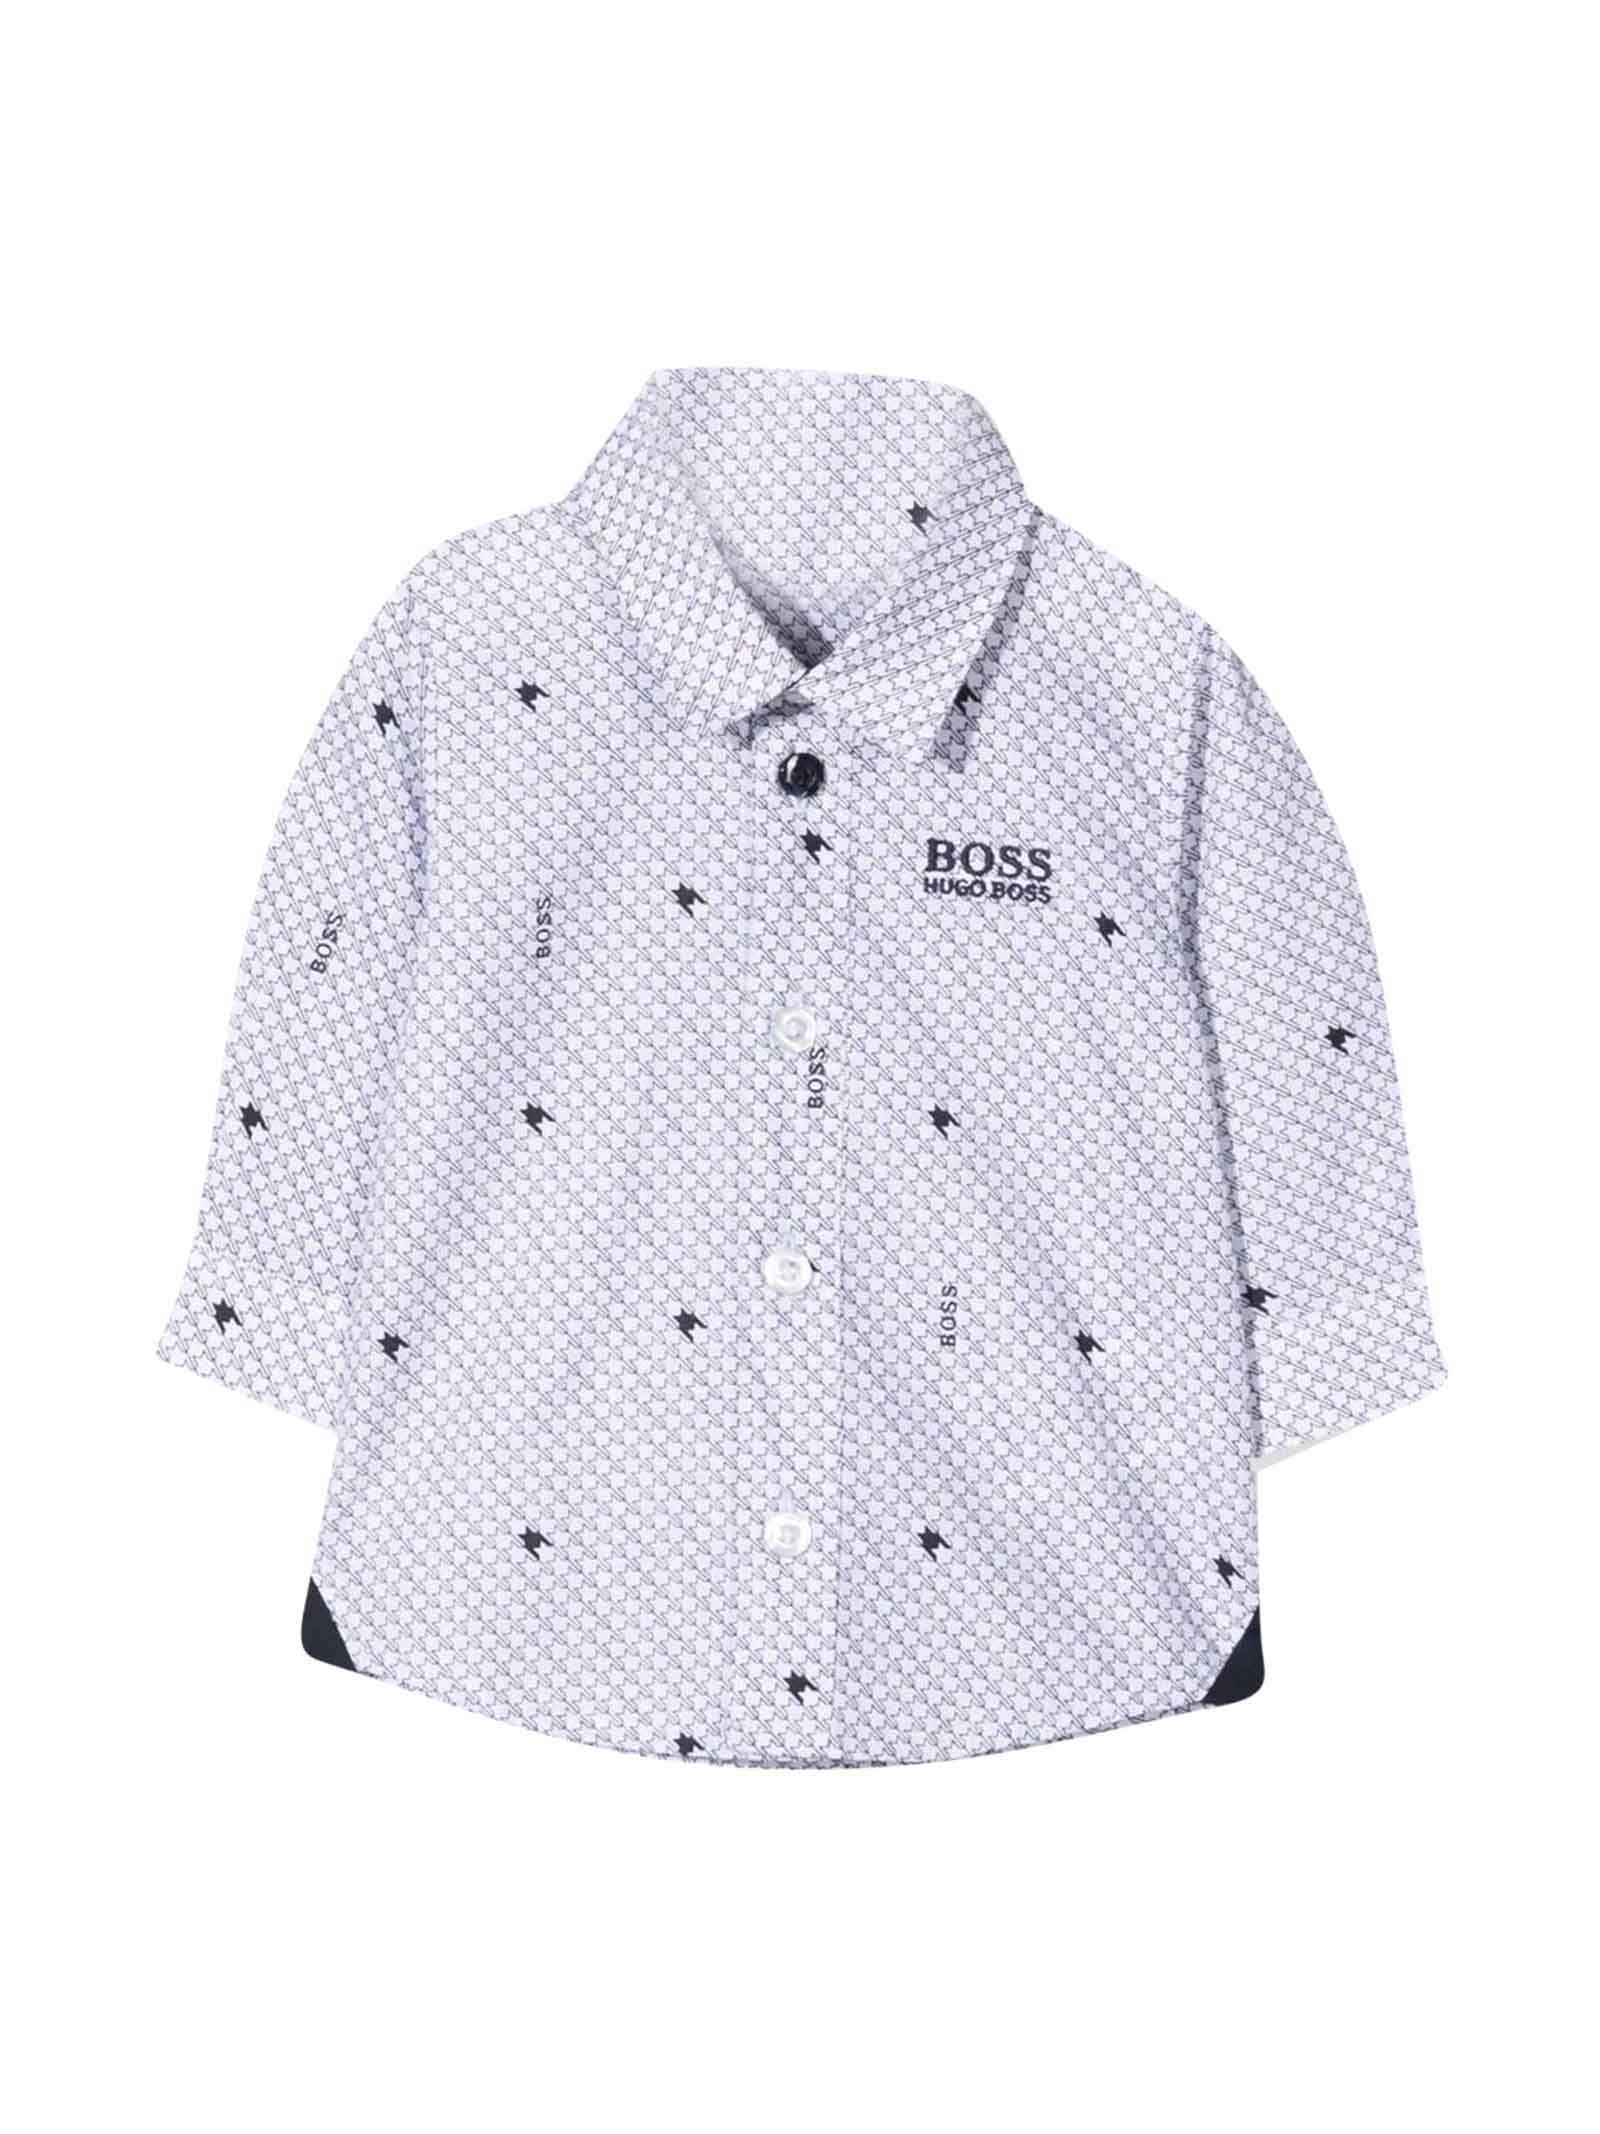 Hugo Boss Printed Shirt